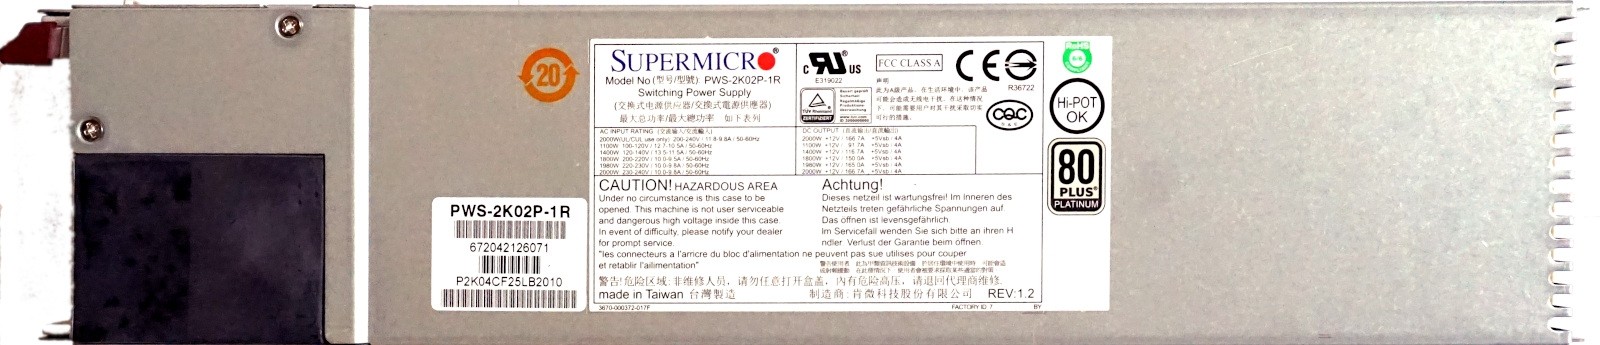 SuperMicro (PWS-2K02P-1R) 2000W 'Platinum' Hot-Swap PSU